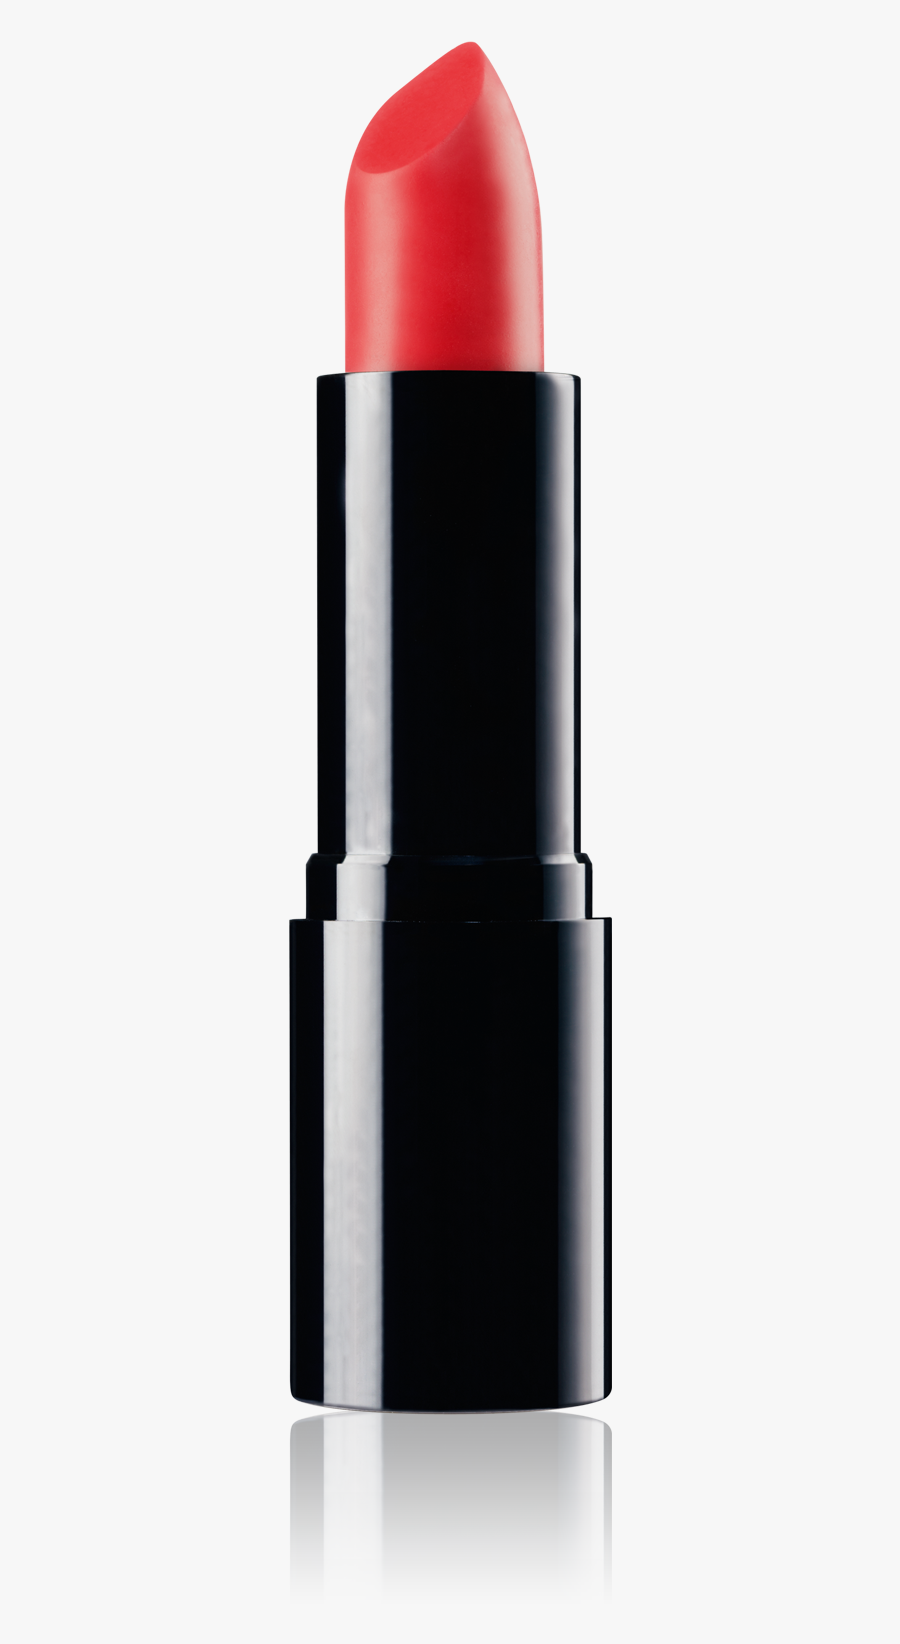 Lipstick Clipart Clear Background - Lipstick Png, Transparent Clipart